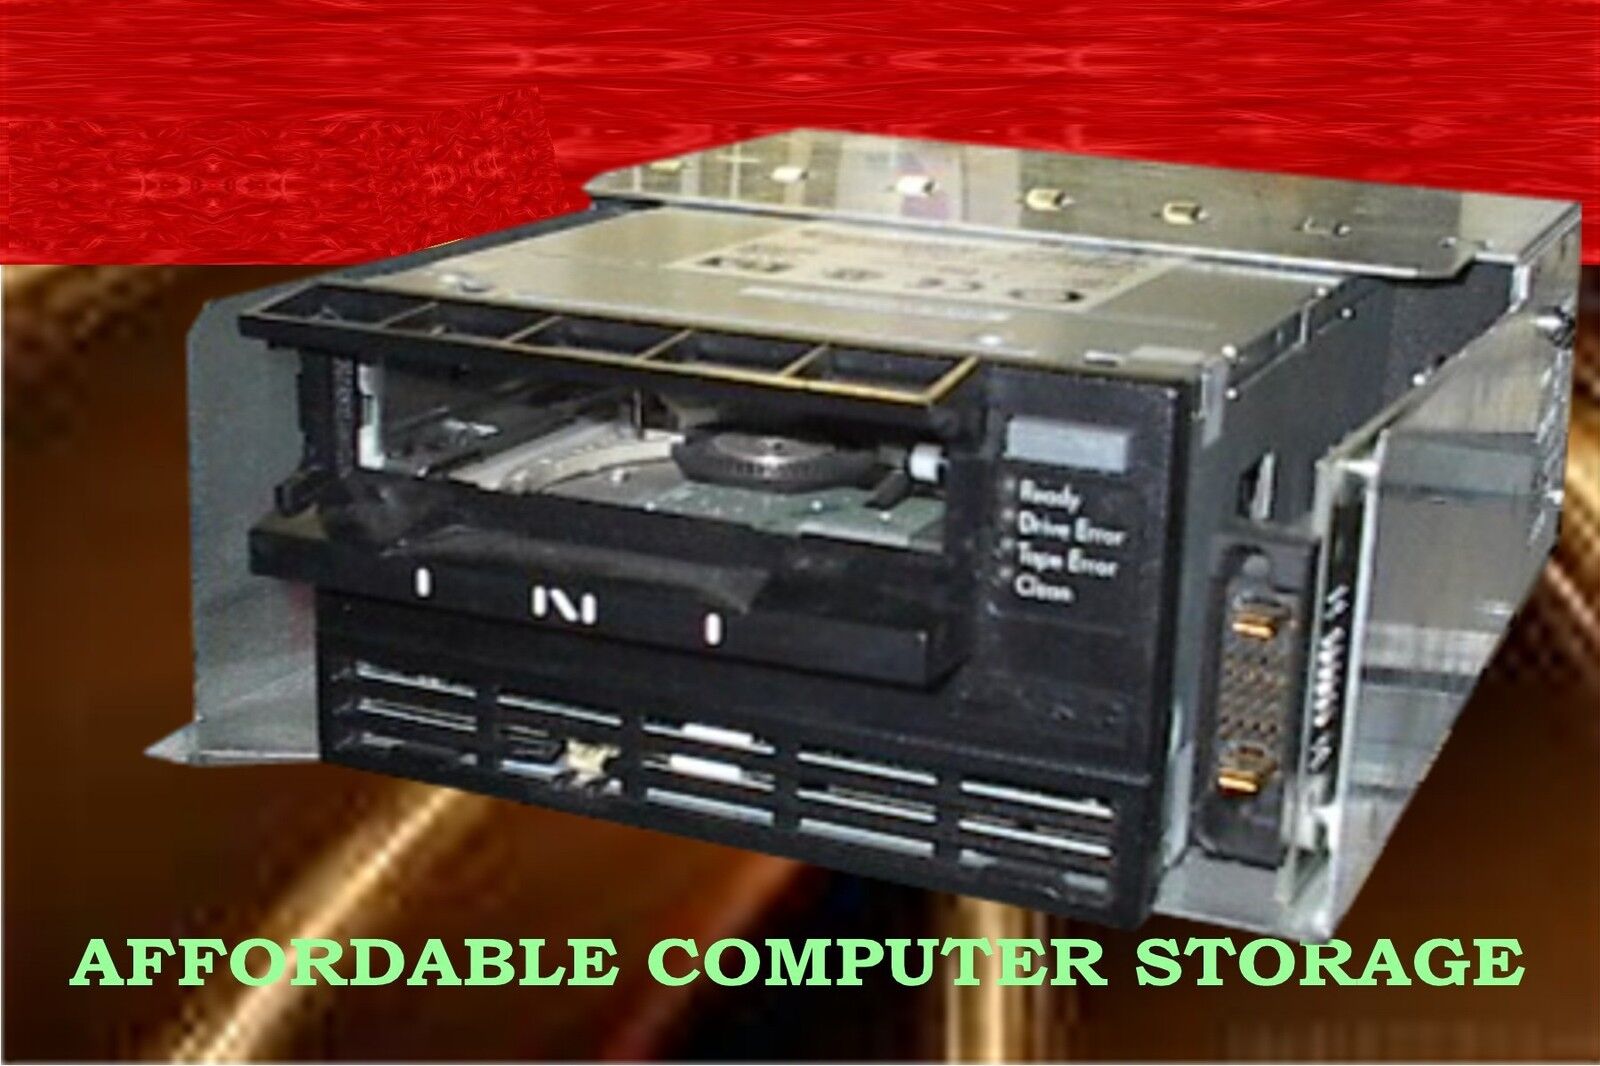 StorageTek LTO-4 Tape Drive 1000521-04 SUN FC 3127905152 003-4518-01 PD098H#704